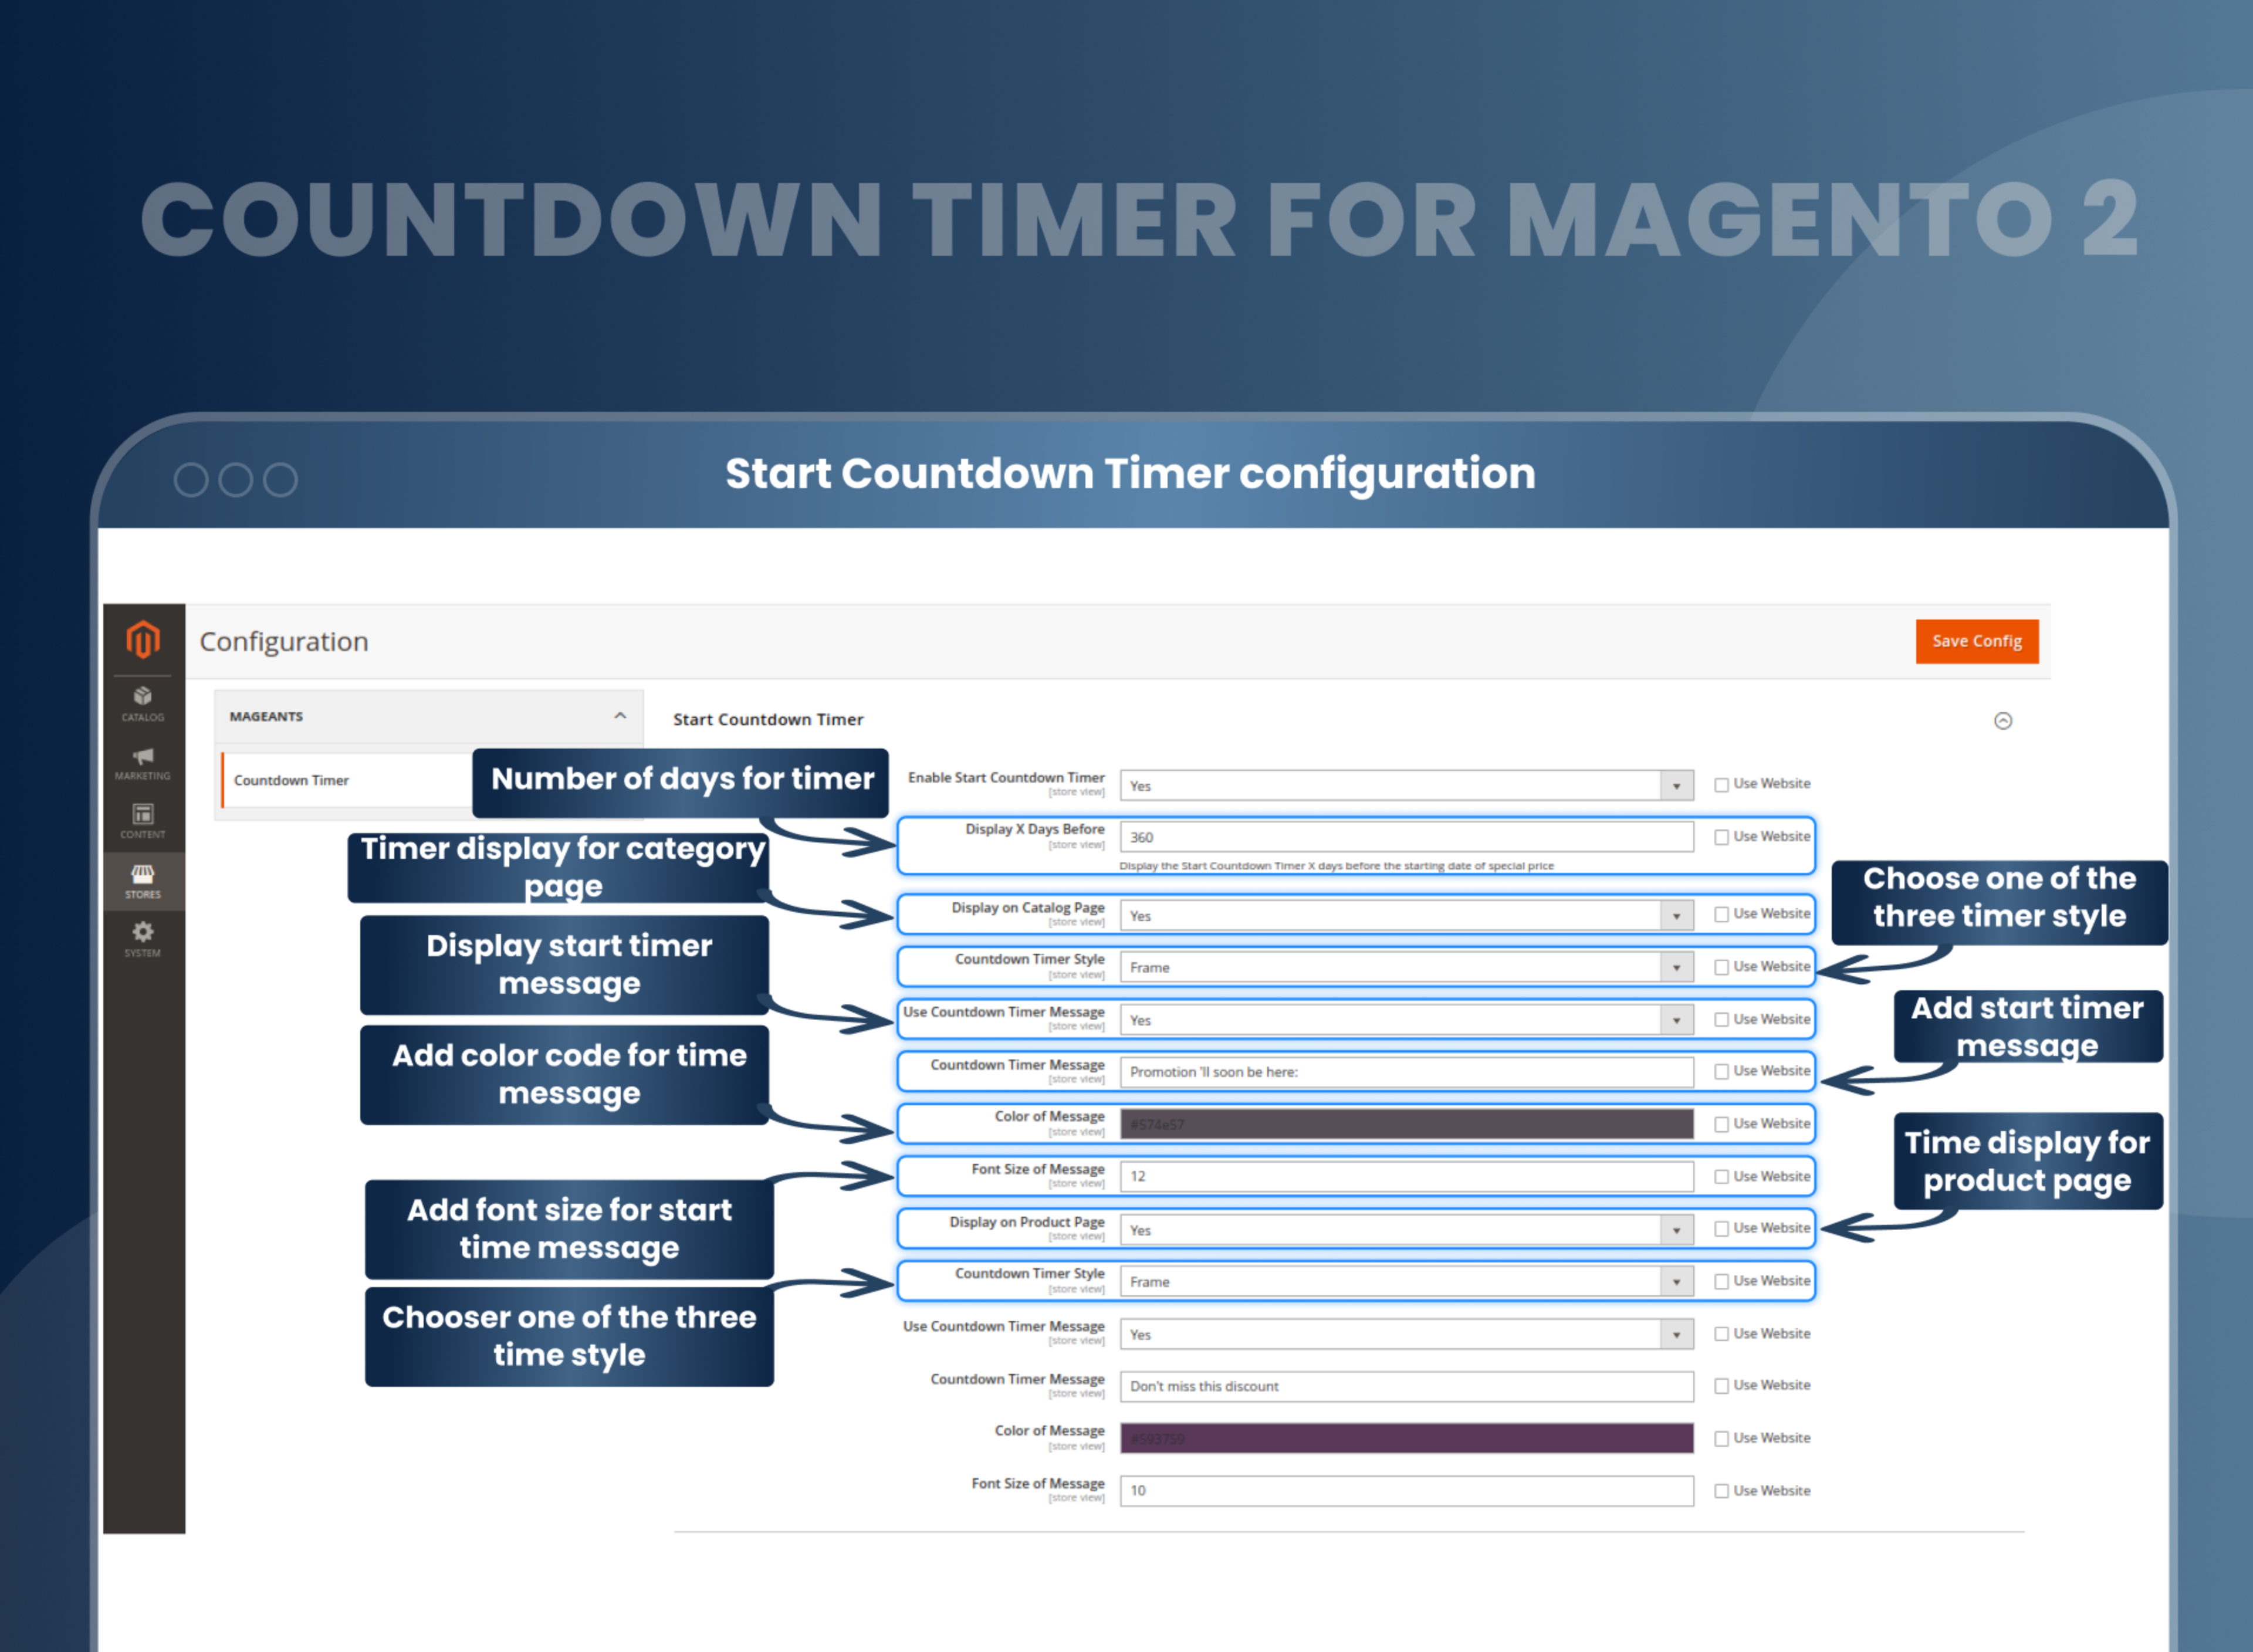 Start Countdown Timer configuration